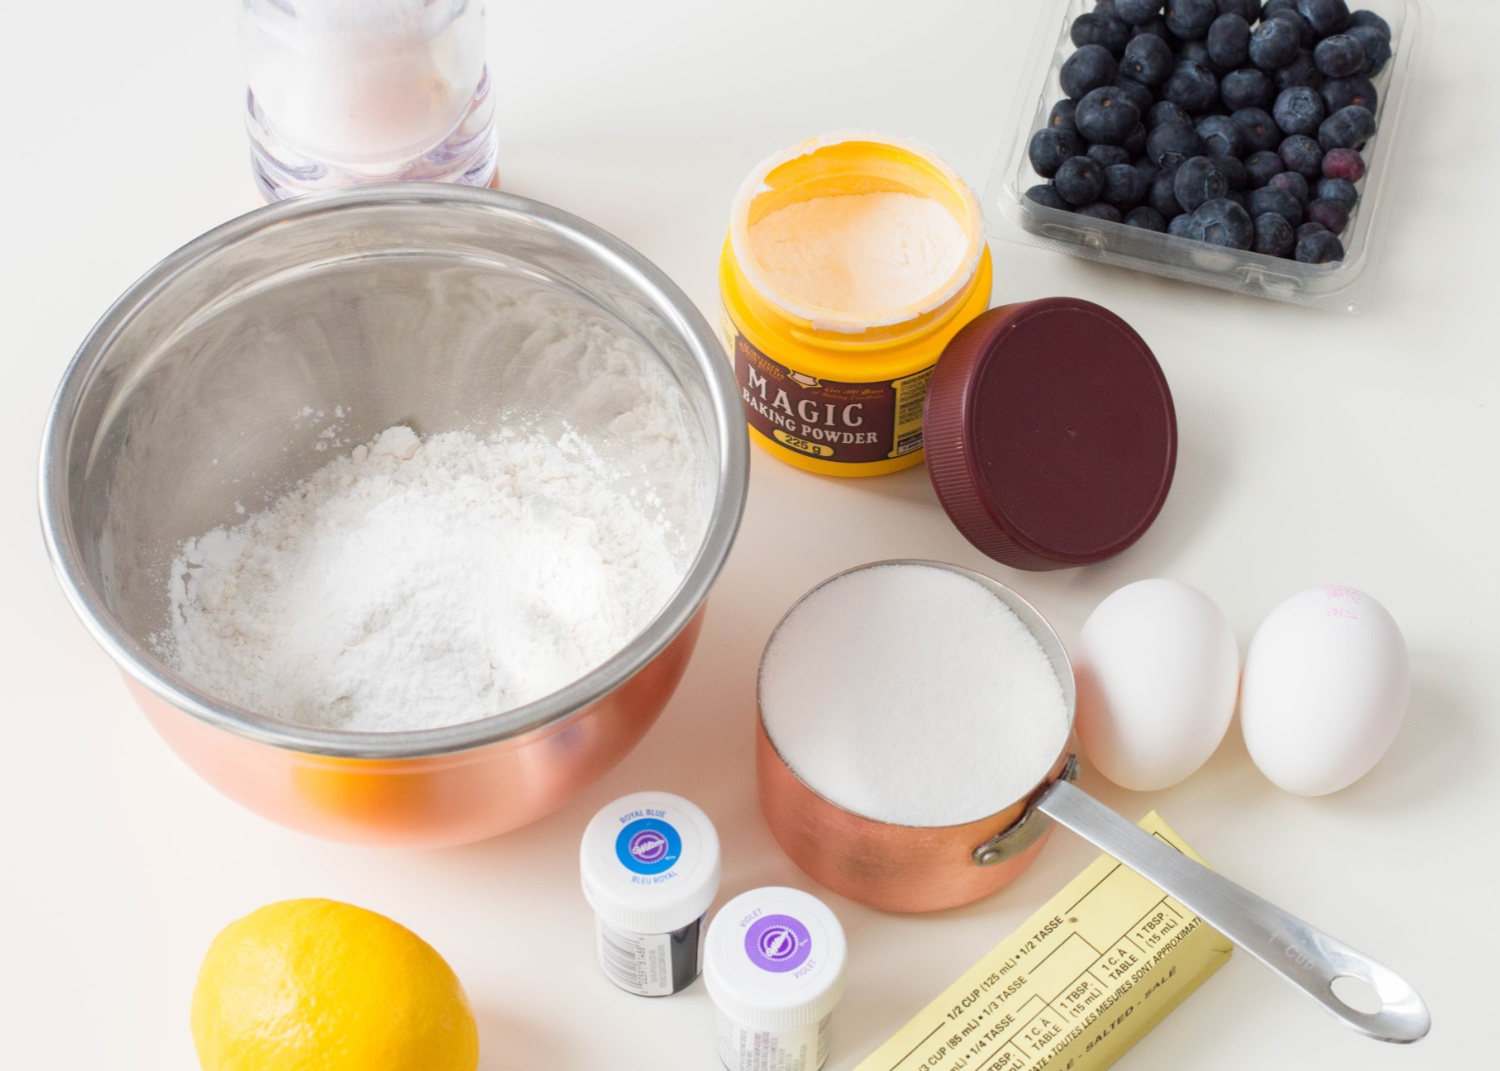 Lemon Blueberry Cupcakes Ingredients include eggs, flour, sugar, lemon zest and fresh blueberries